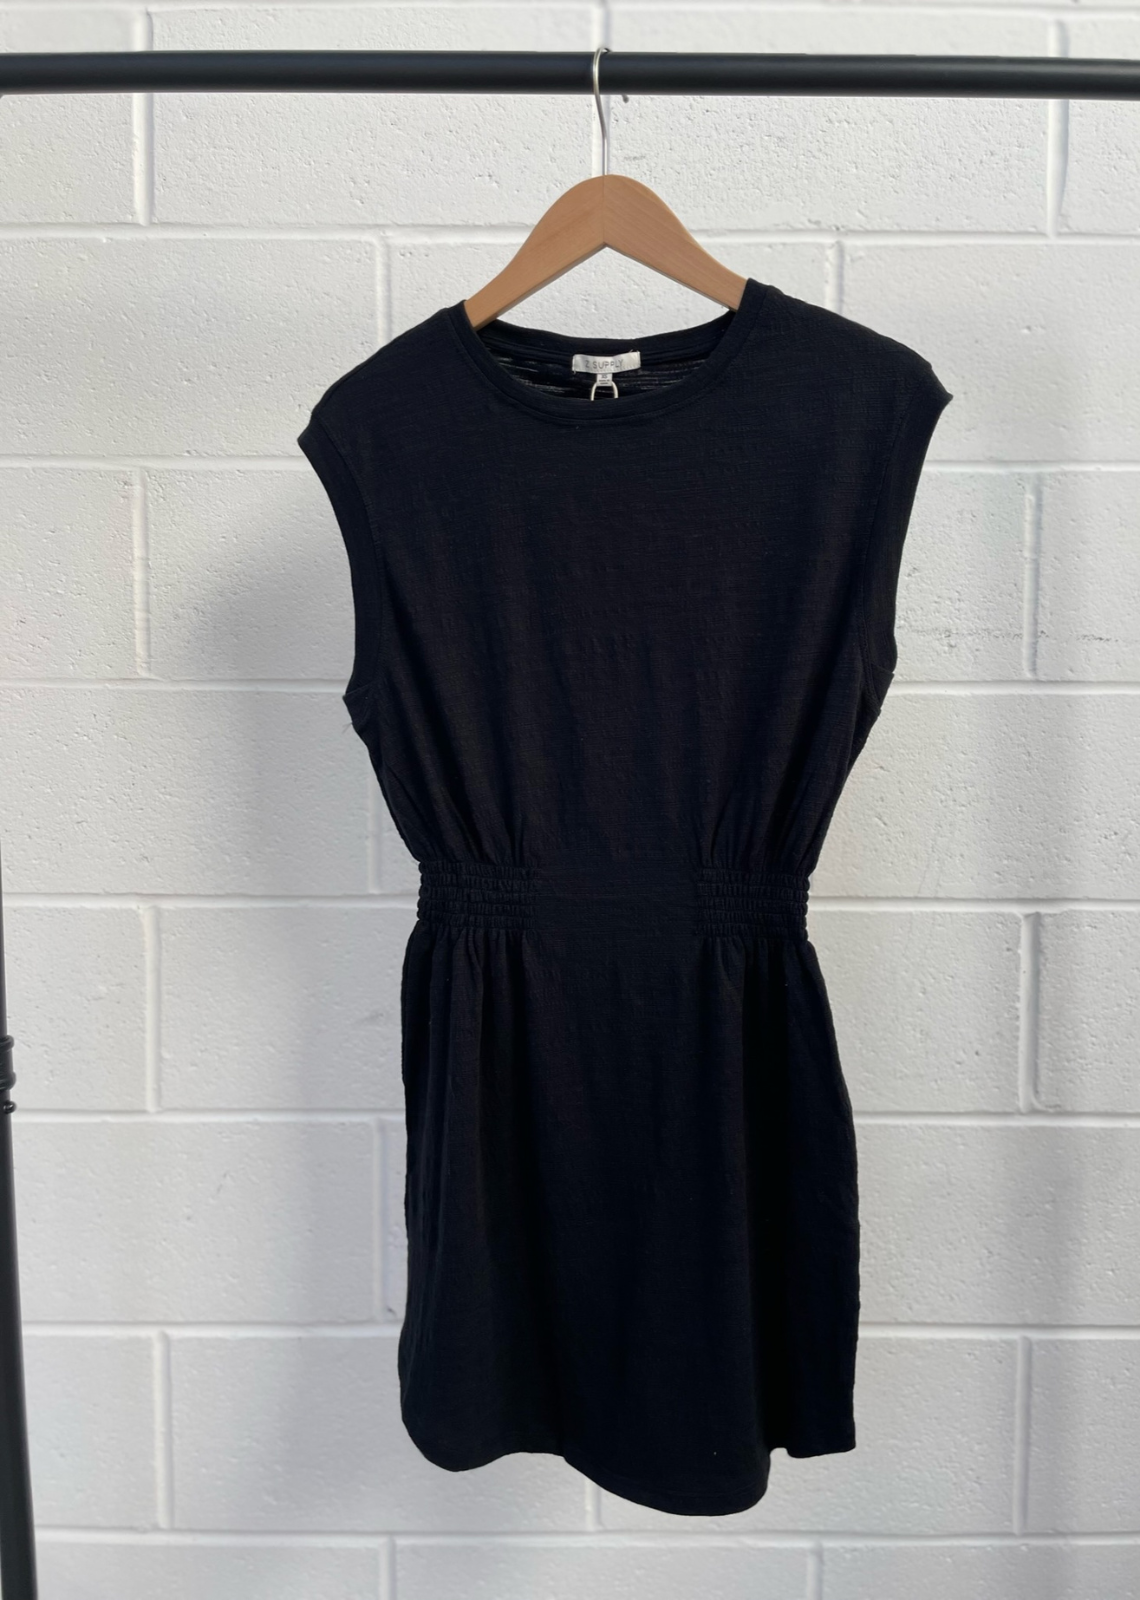 Z Supply Rowan Textured Knit Dress - Black